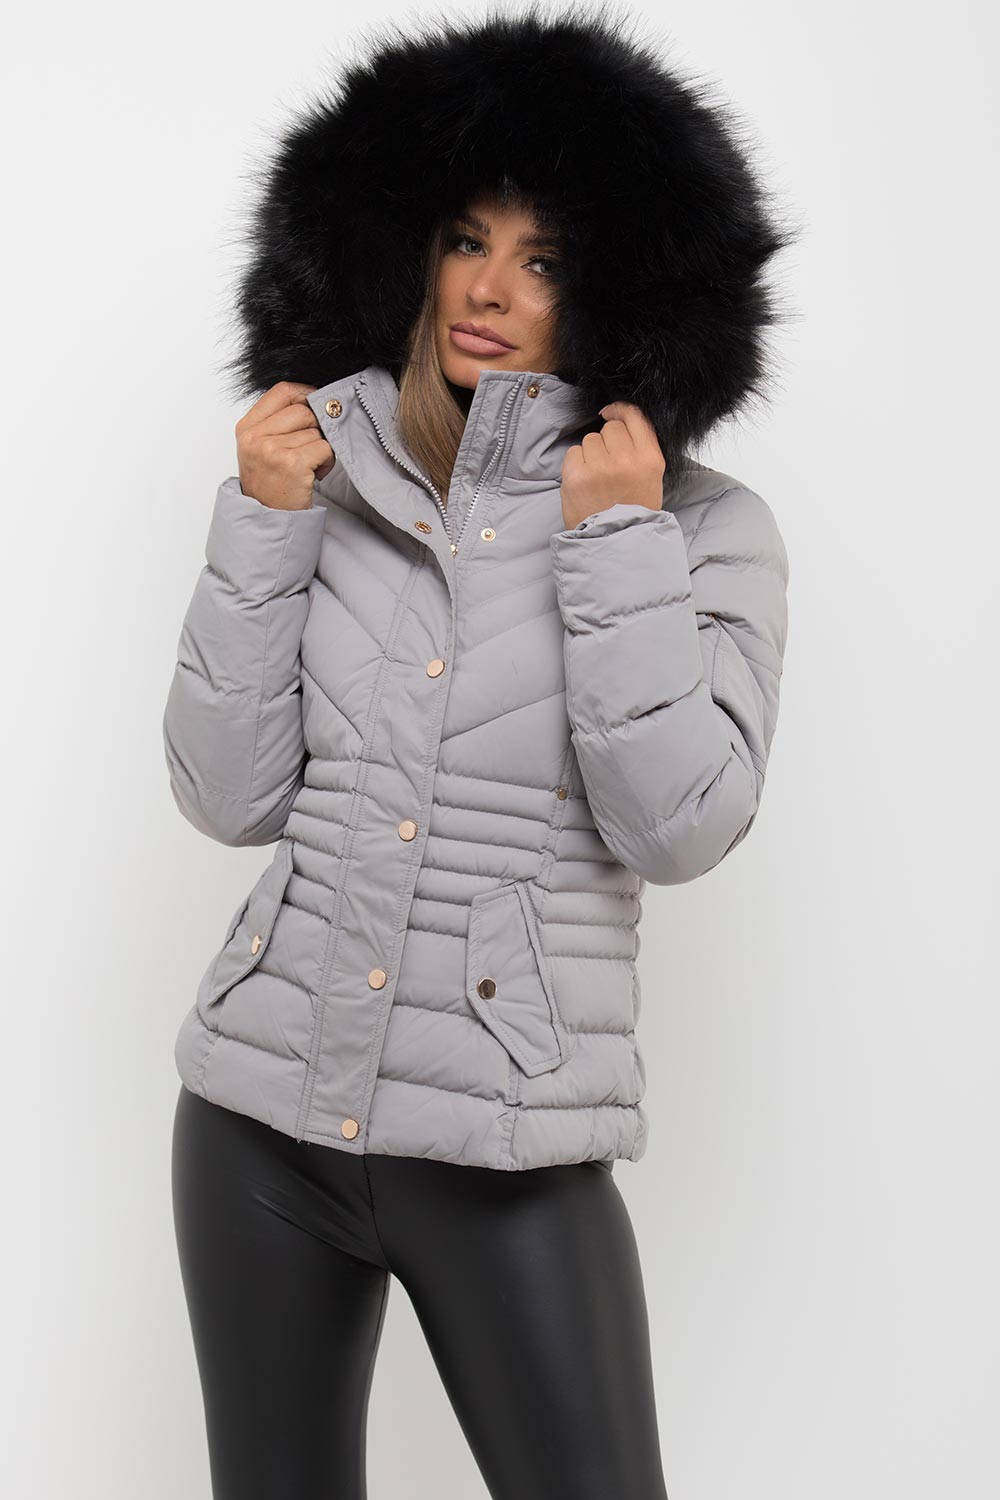 Womens Grey Puffer Coat With Big Faux Fur Hood – Styledup.co.uk